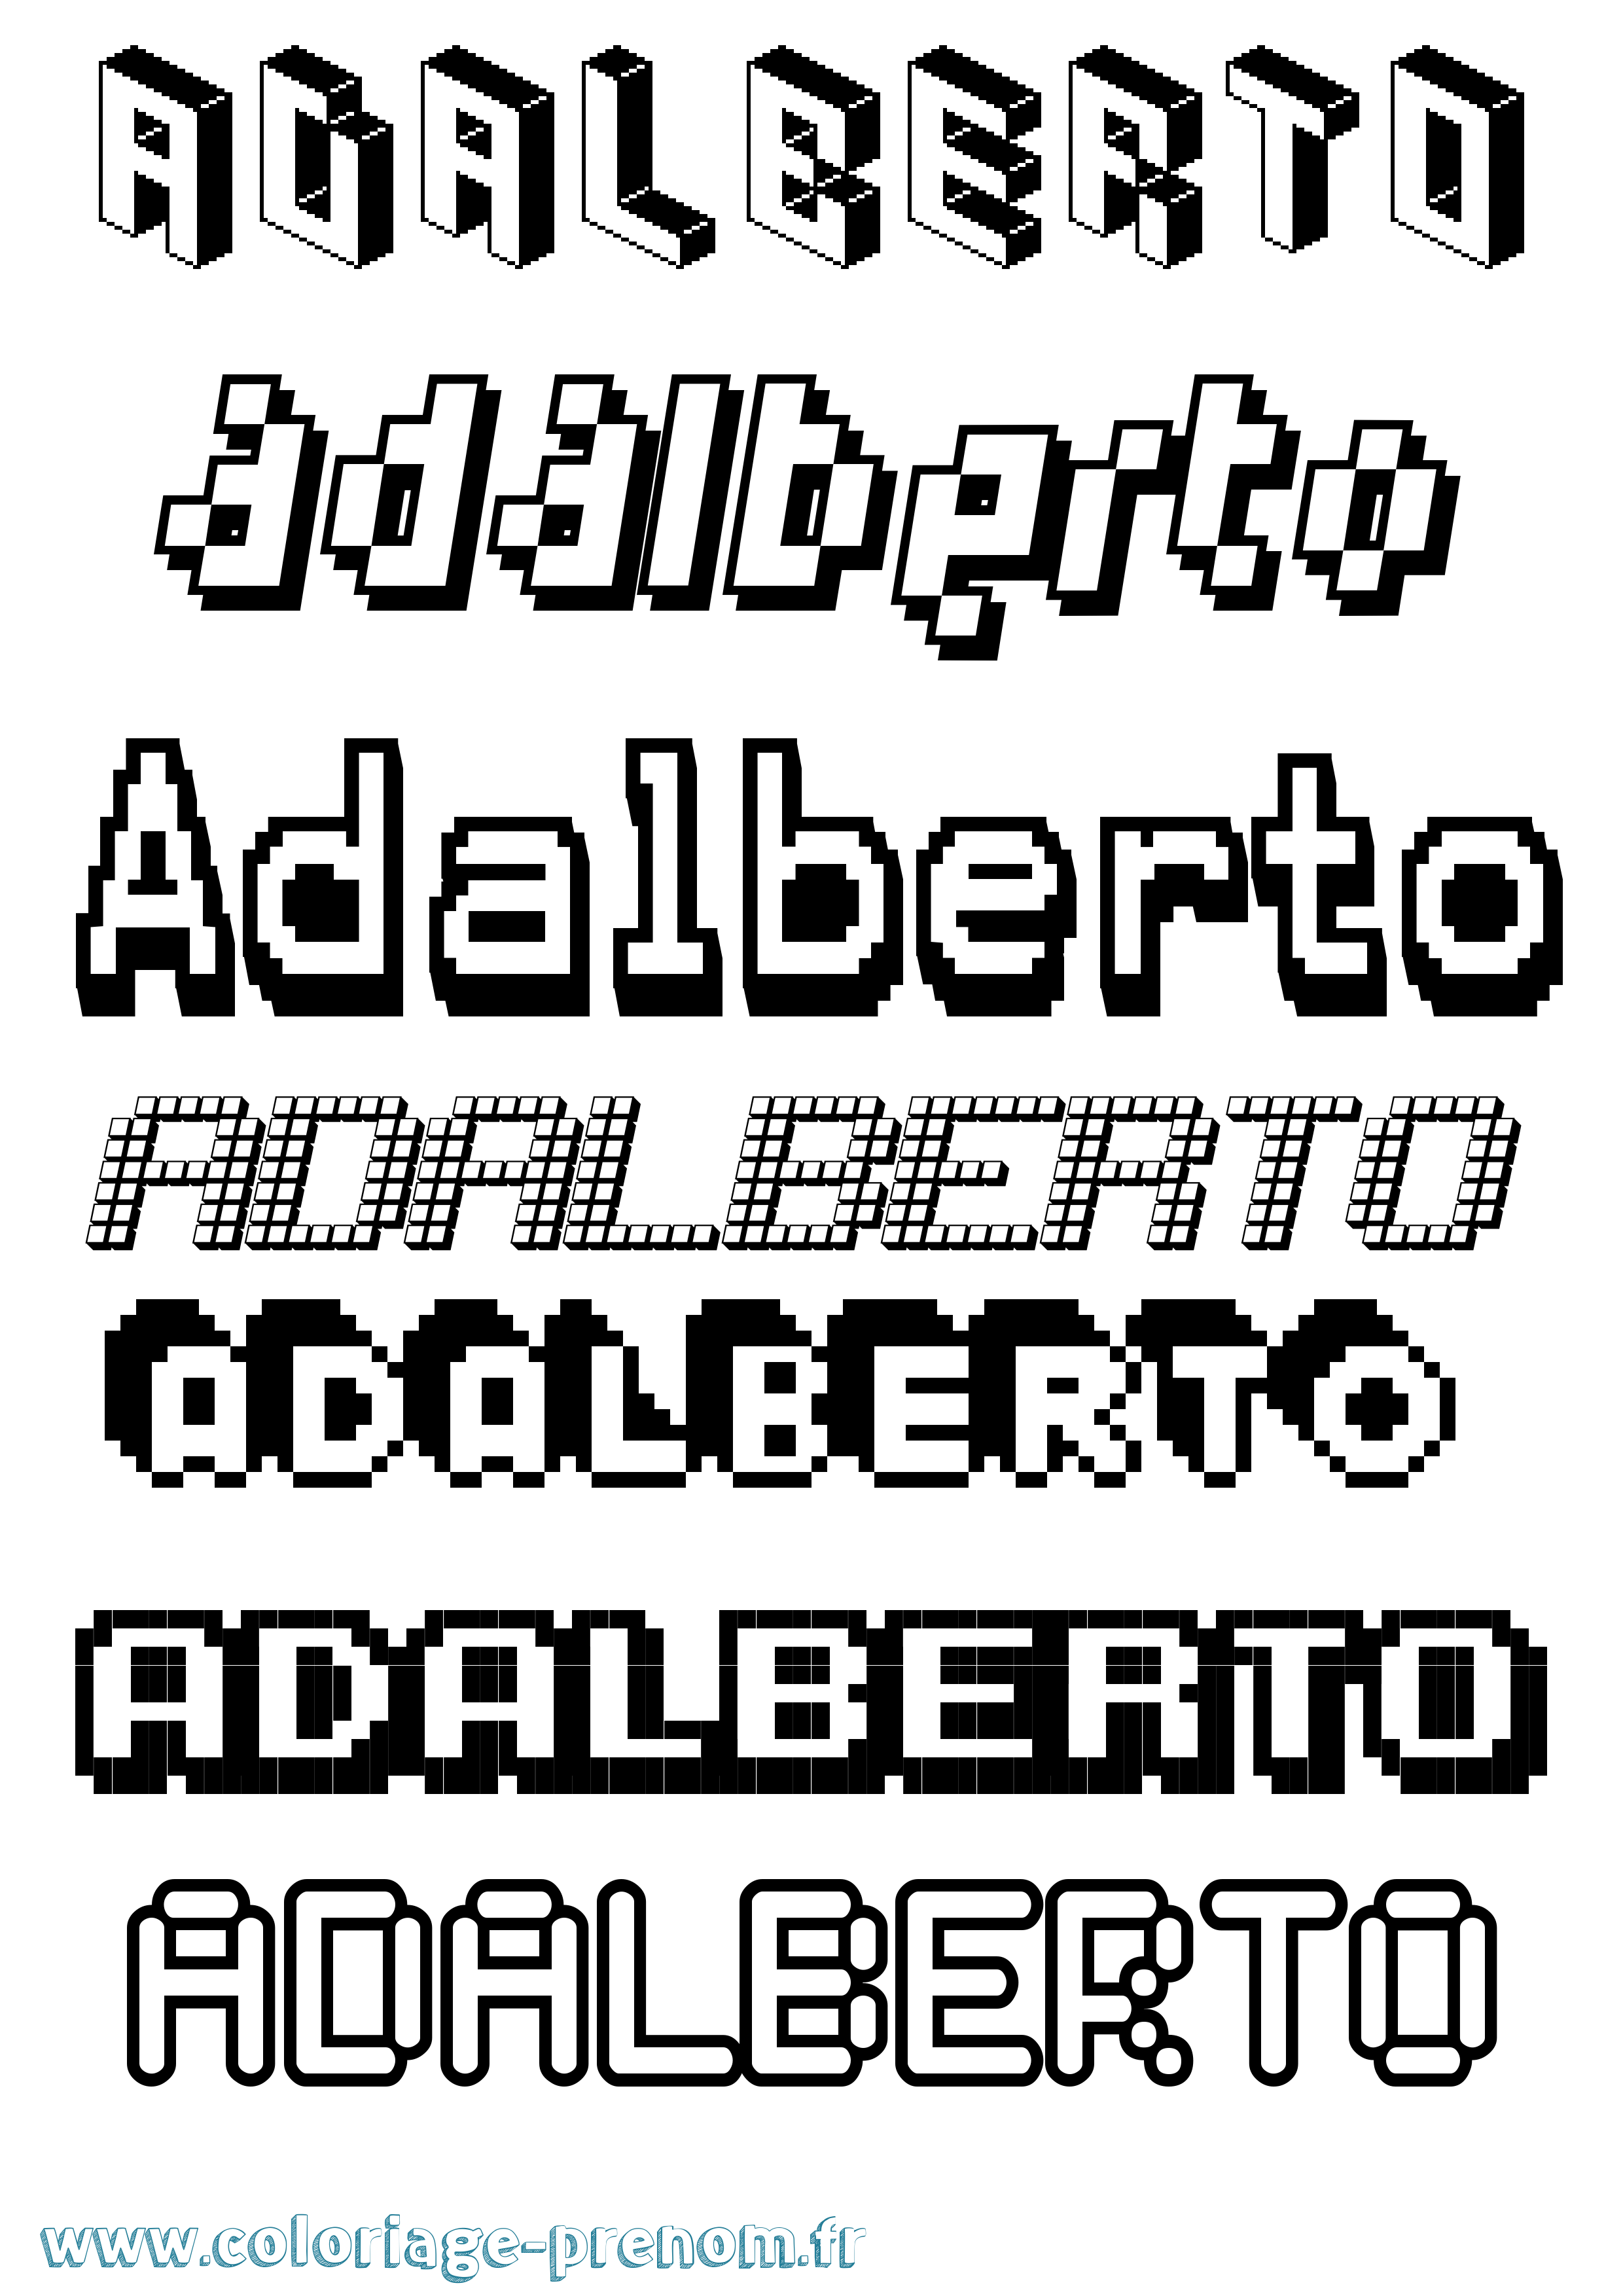 Coloriage prénom Adalberto Pixel